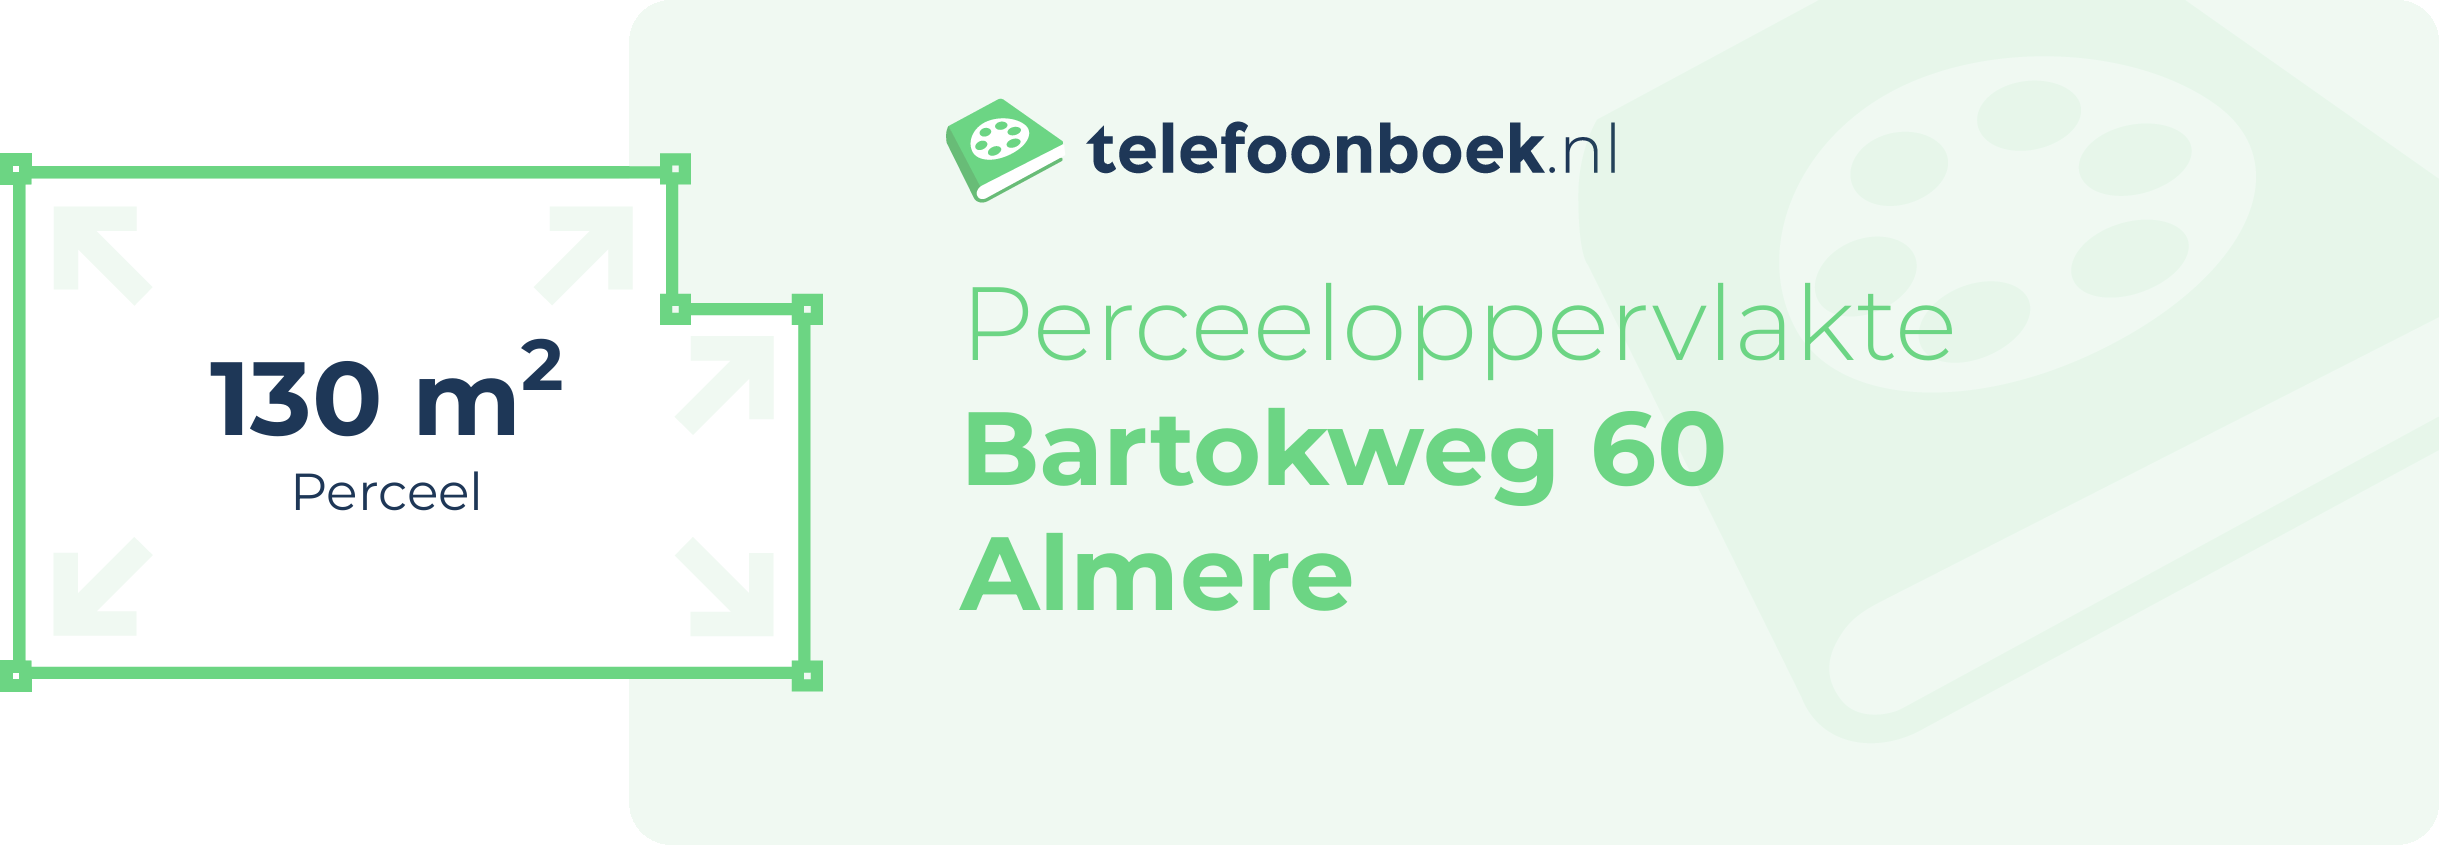 Perceeloppervlakte Bartokweg 60 Almere